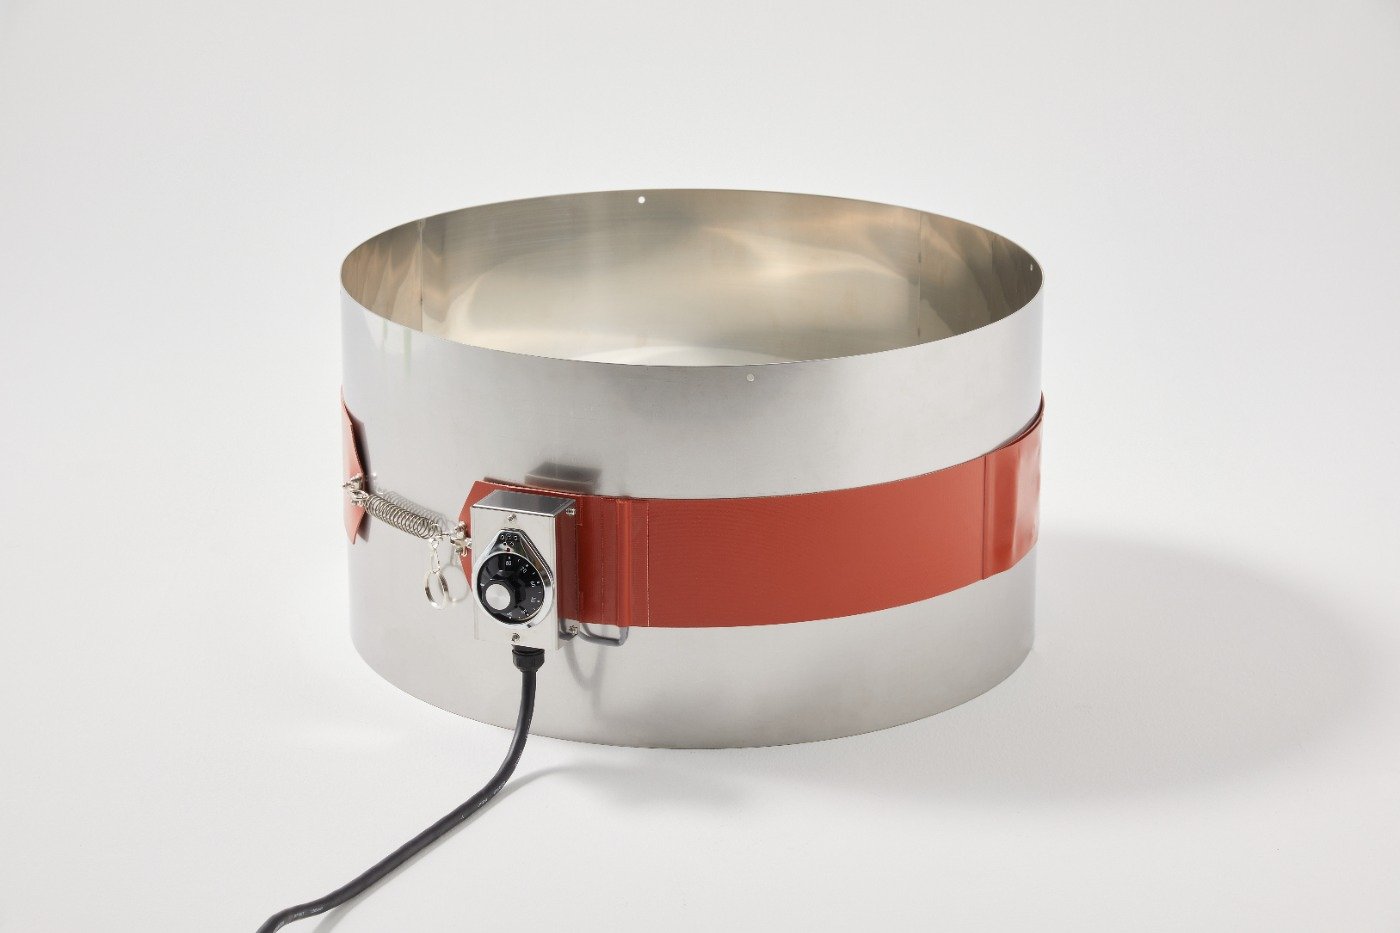 BAOSHISHANドラム缶ヒーター オーエムヒーター ドラム缶用加熱機器 加熱ベルト ノブ型 オレンジ200L110V (200L 174 - 5